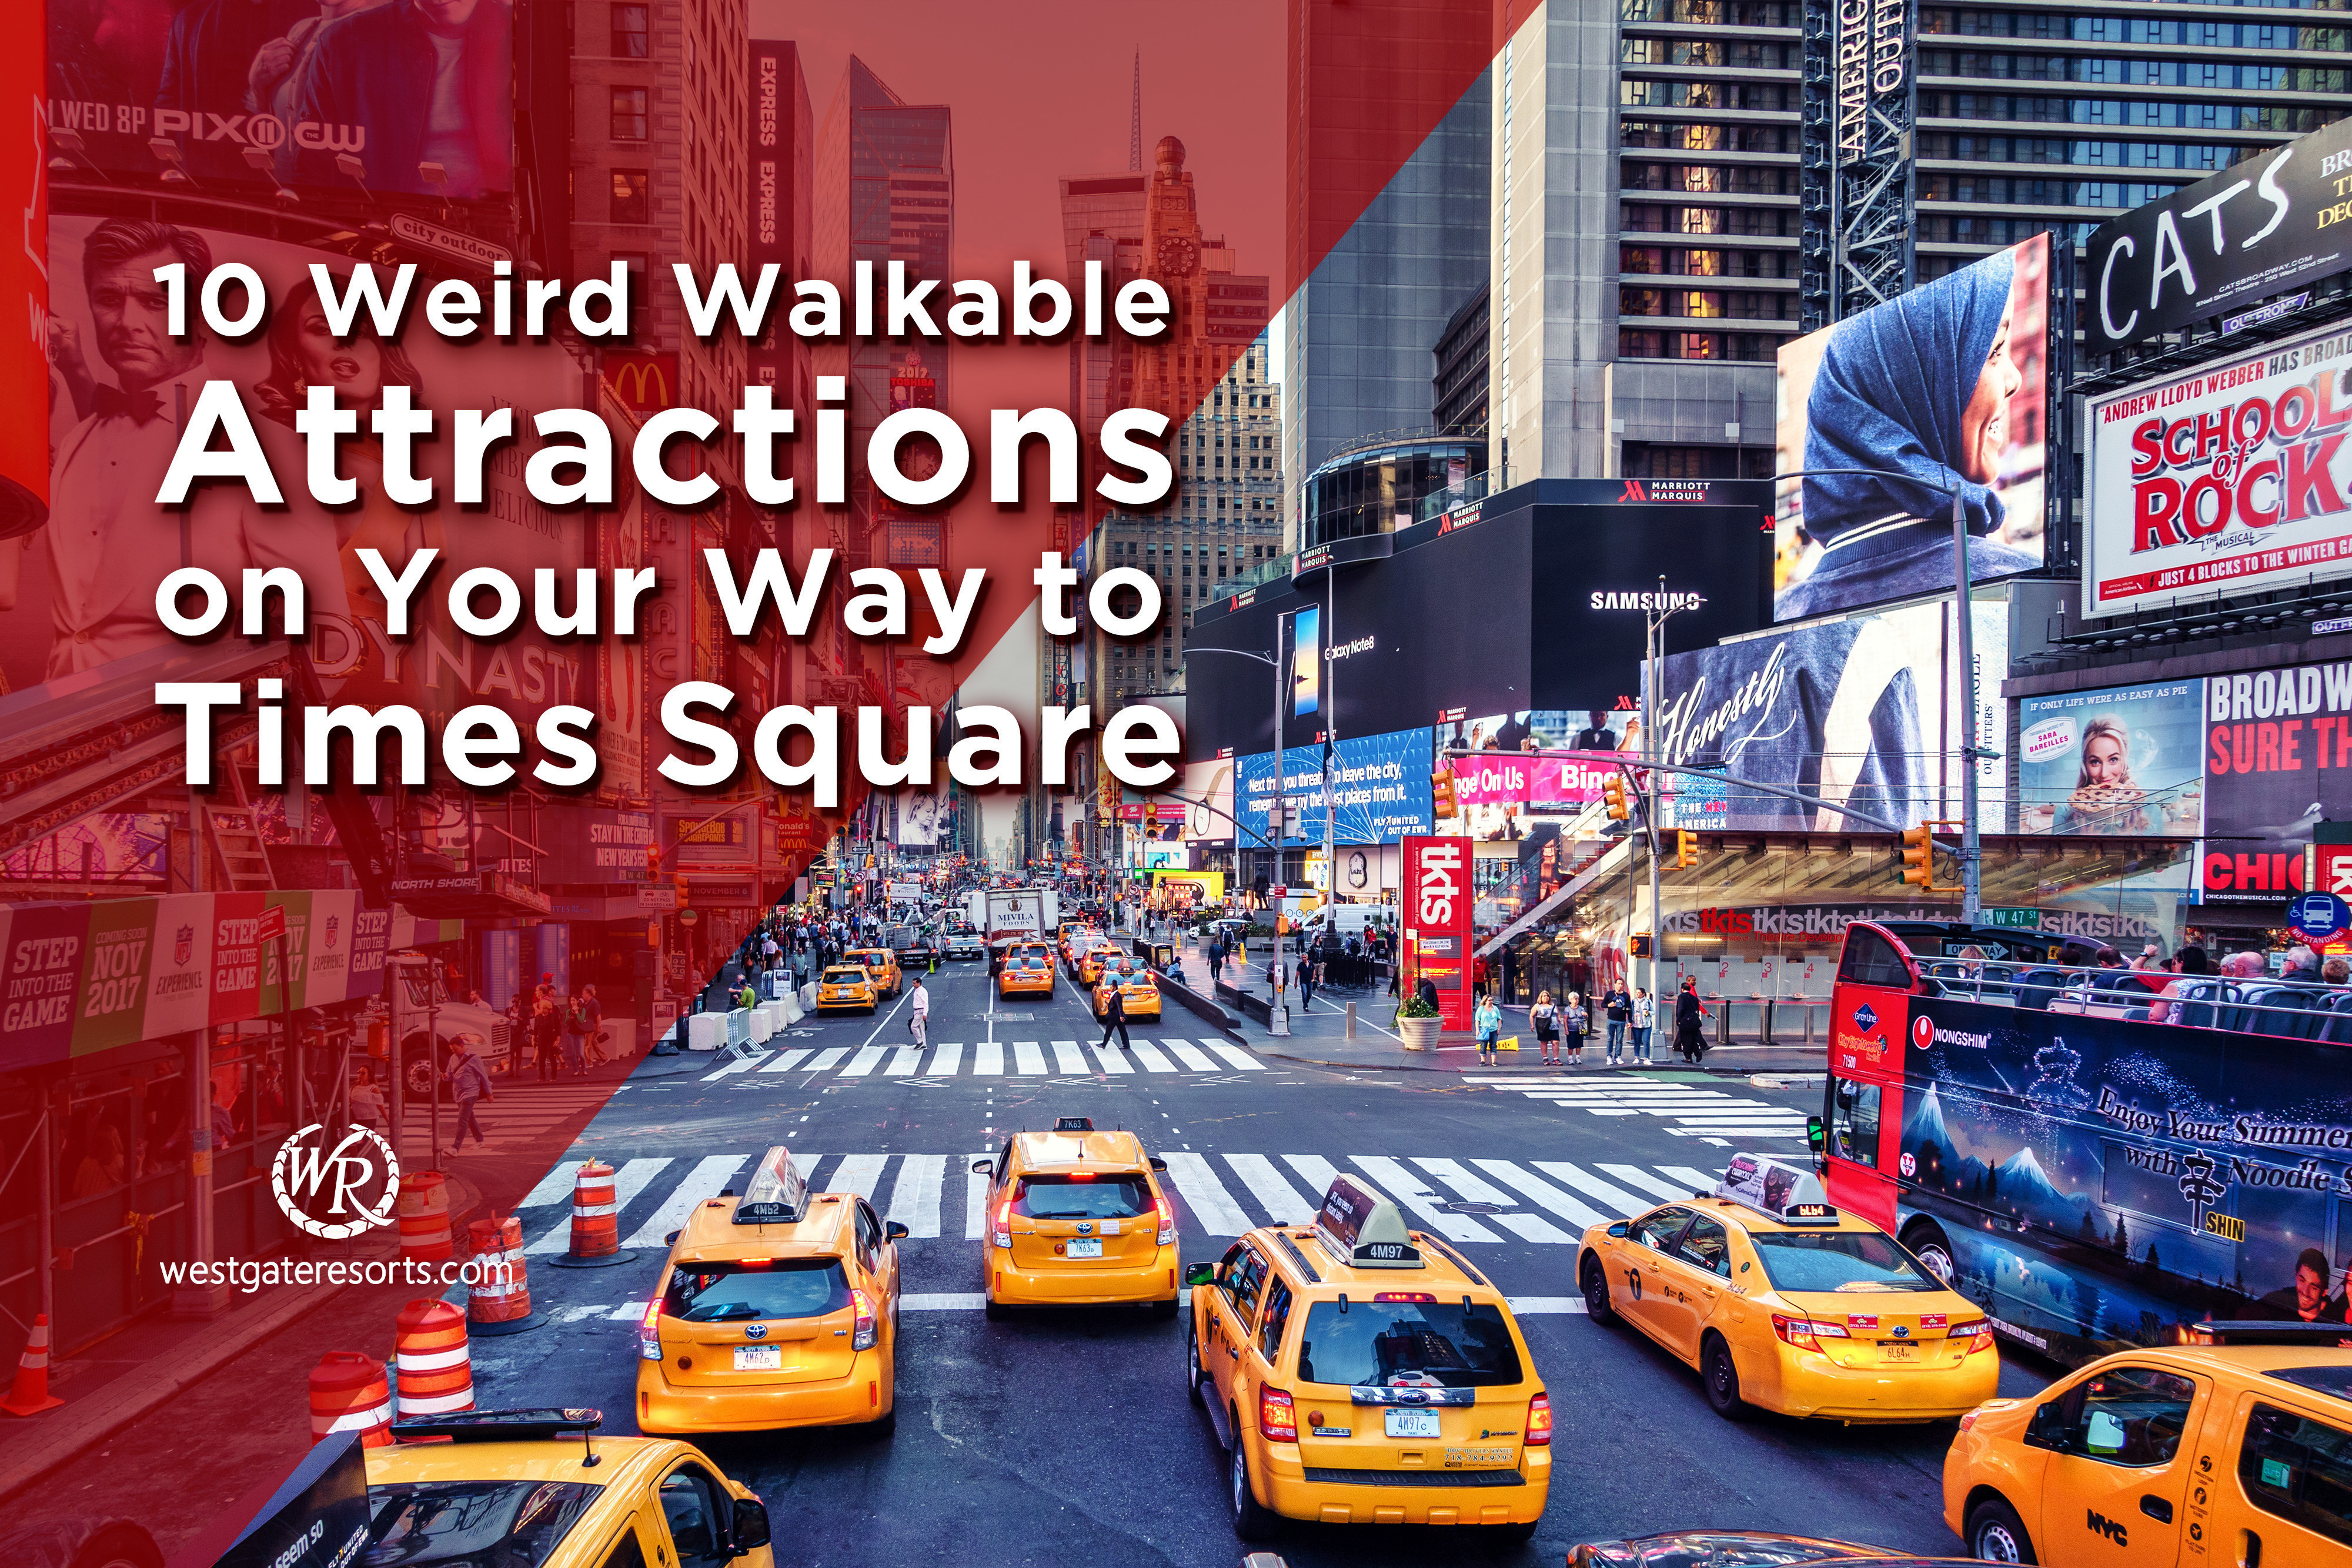 10 atracciones extrañas para caminar en tu camino a Times Square